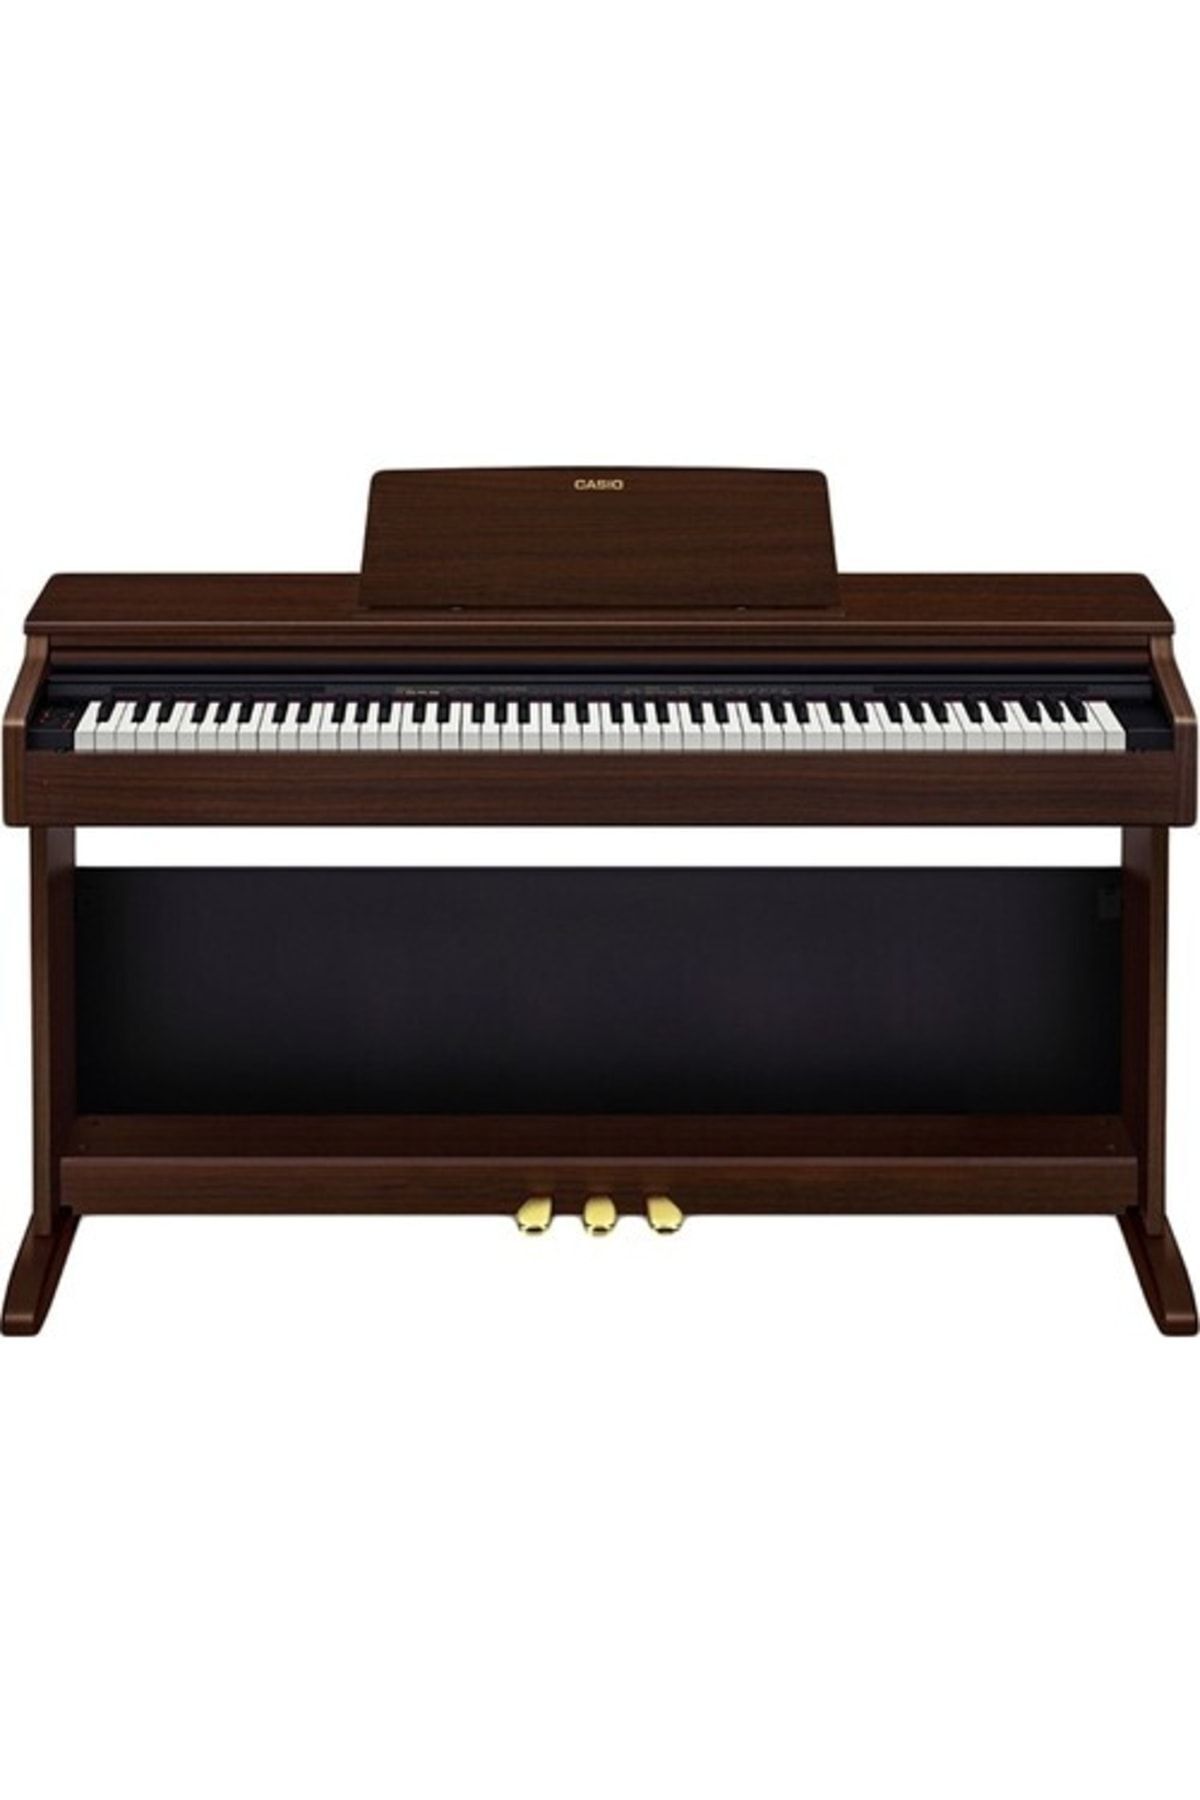 Casio Ap270bn Celvıano Dijital Piyano - Kahverengi